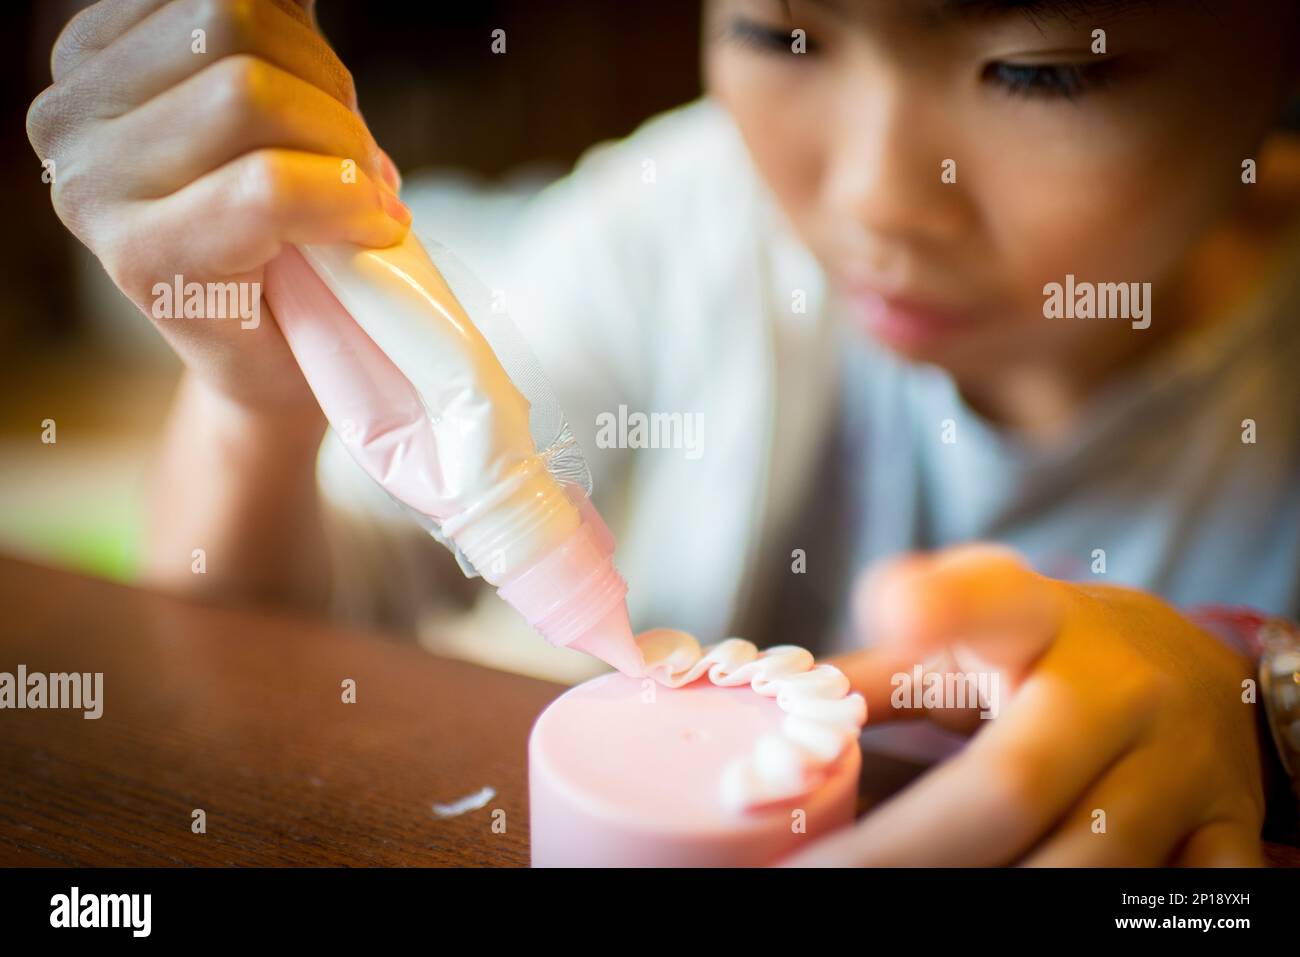 Girls making craft cakes using silicone paste Stock Photo